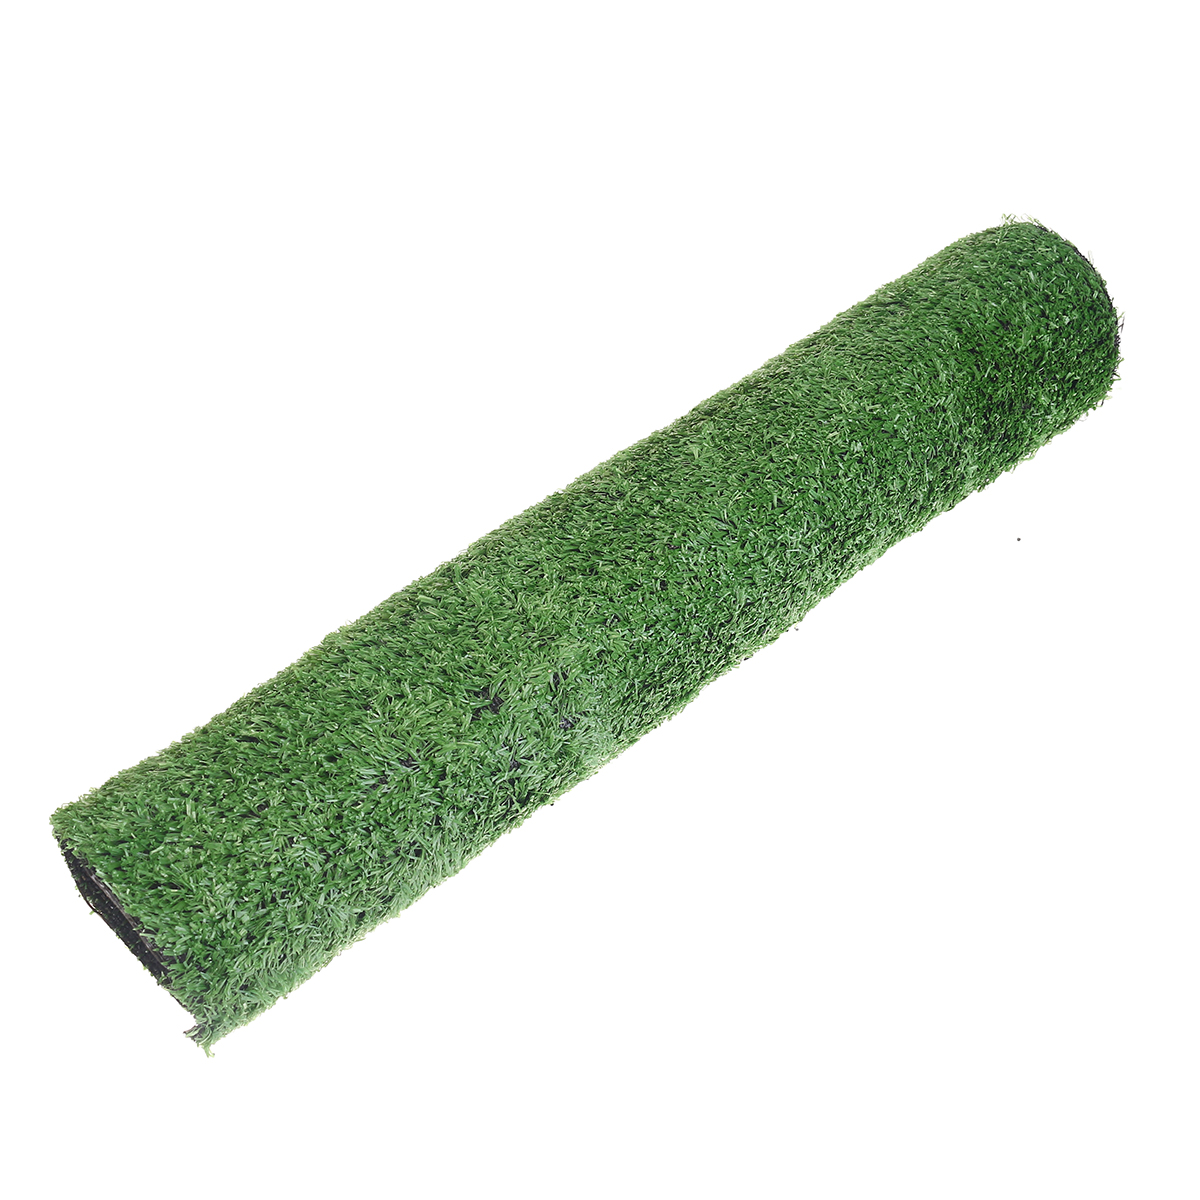 05x05m-Artificial-Simulation-Carpet-Floor-Mat-Green-Artificial-Lawn-1702506-8